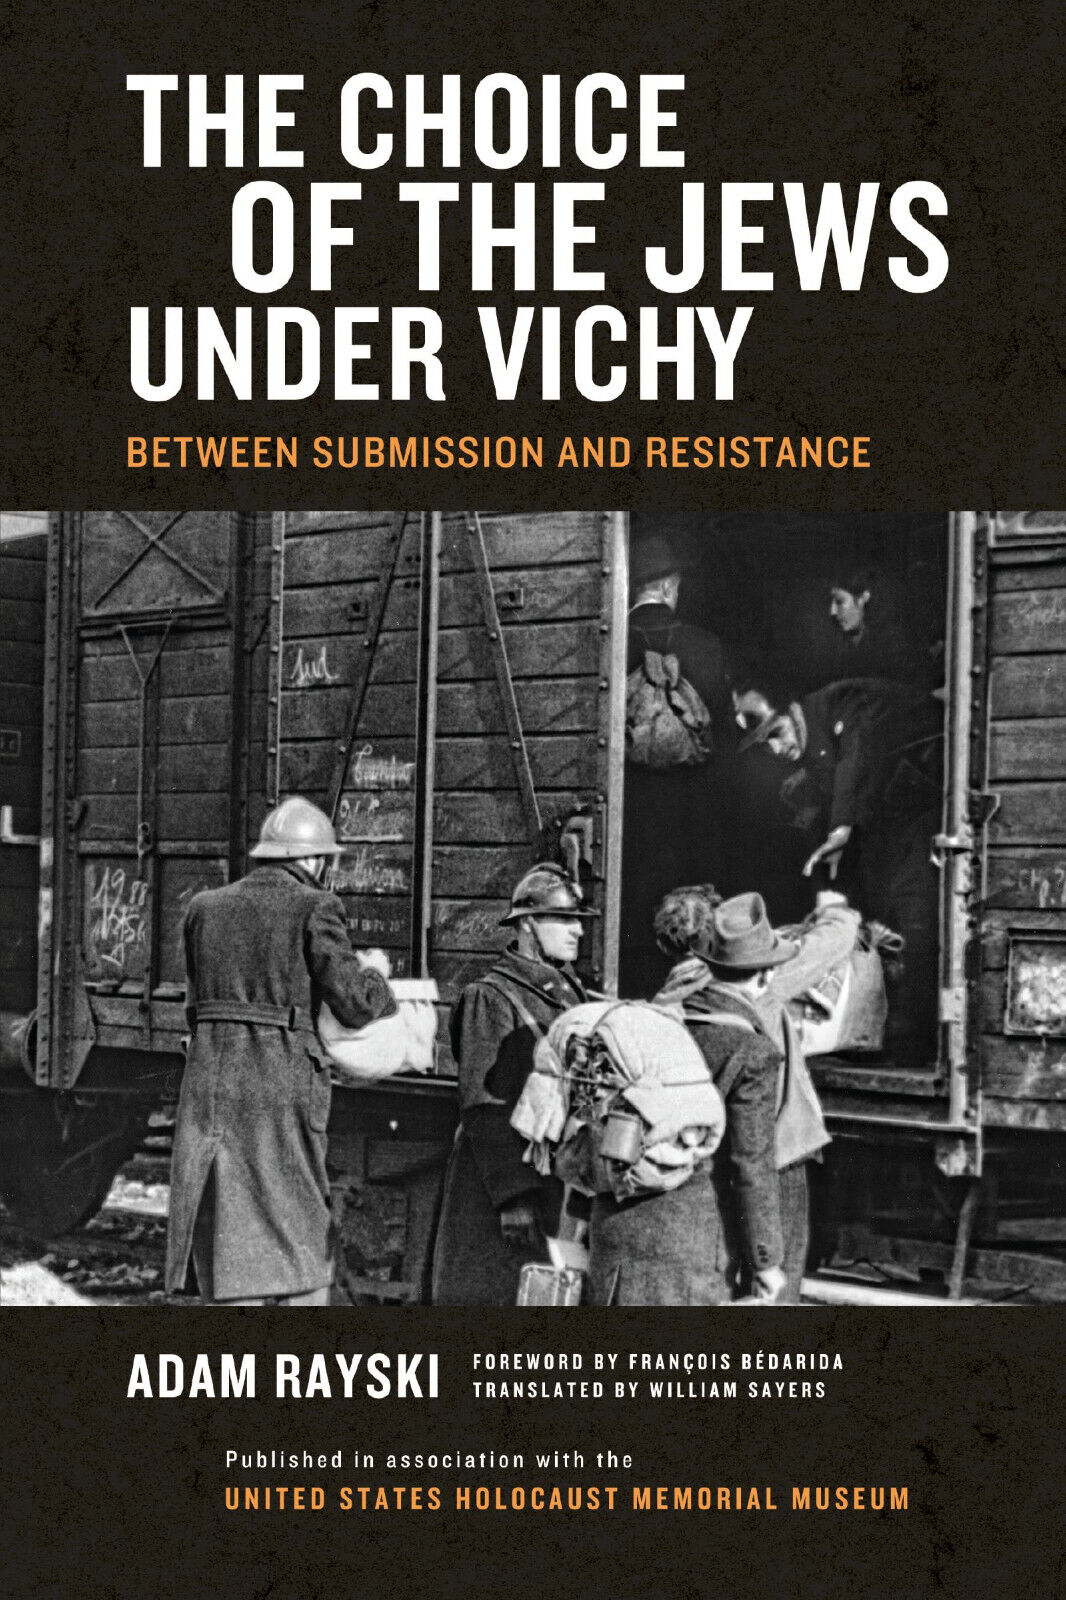 The Choice of the Jews under Vichy - Adam Rayski - univ of notre dame, 2015